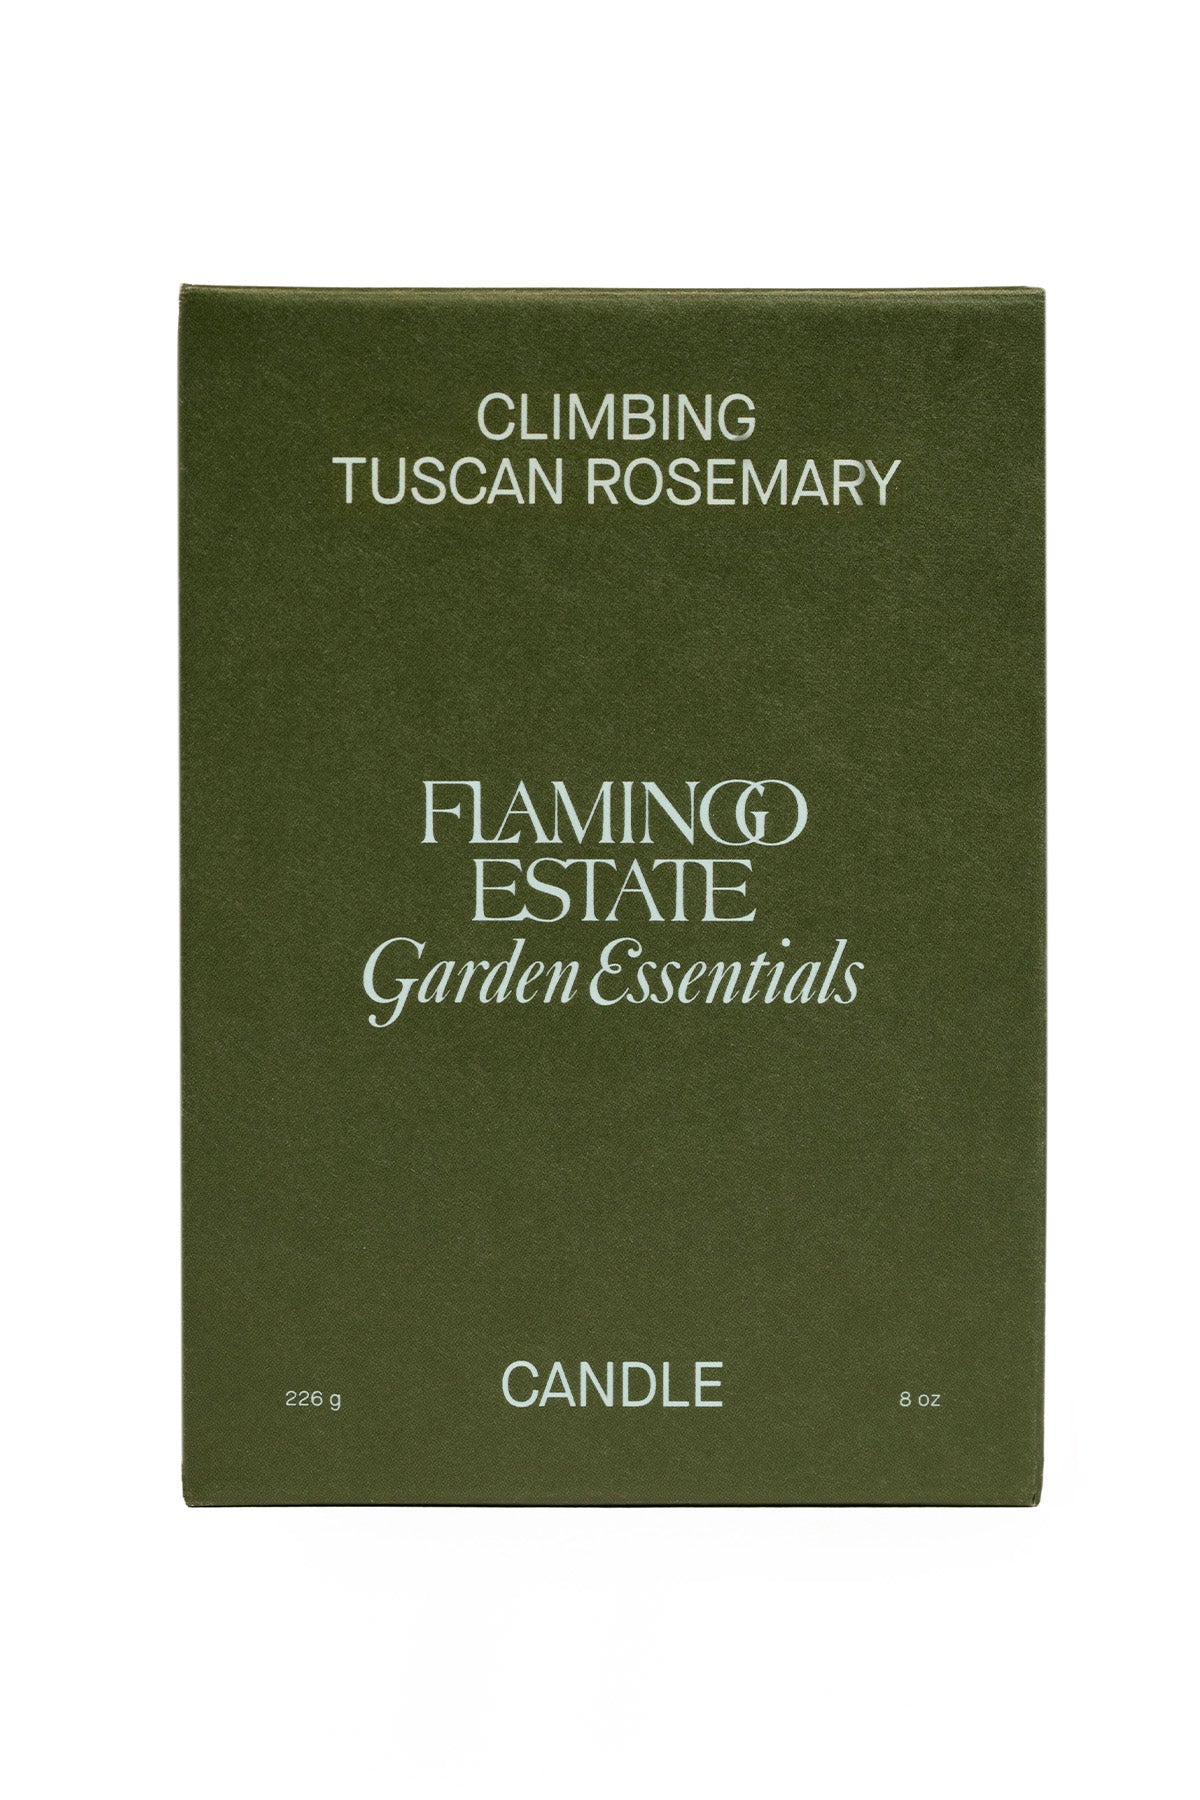 FLAMINGO ESTATE | CLIMBING TUSCAN ROSEMARY CANDLE